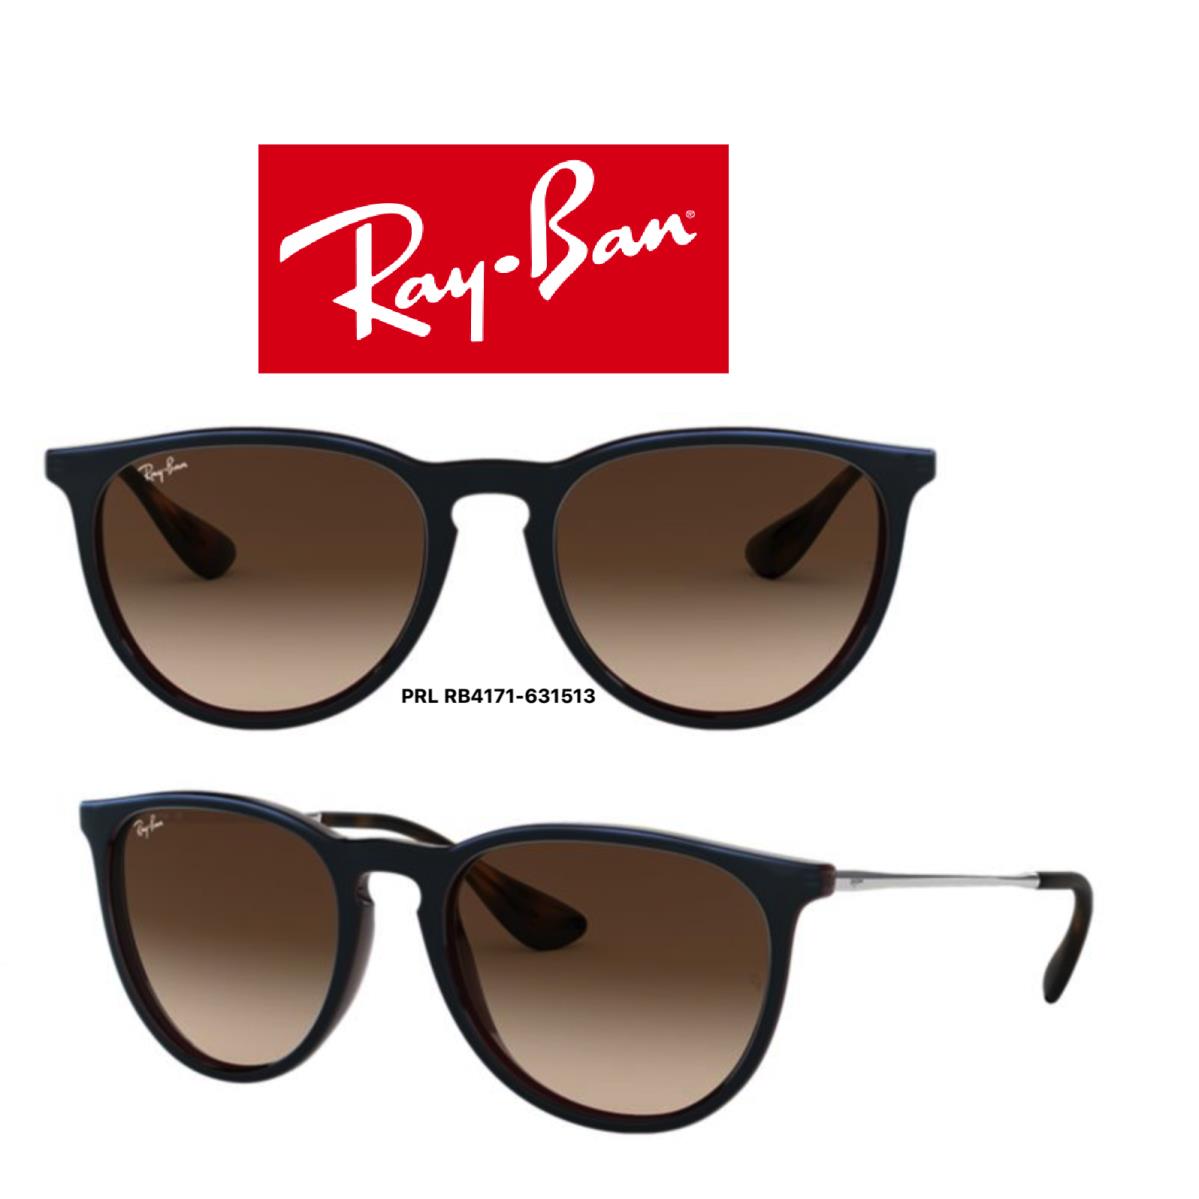 Ray-ban Ray Ban Sunglasses RB4171 Erika - Multiple Colors RB4171 631513